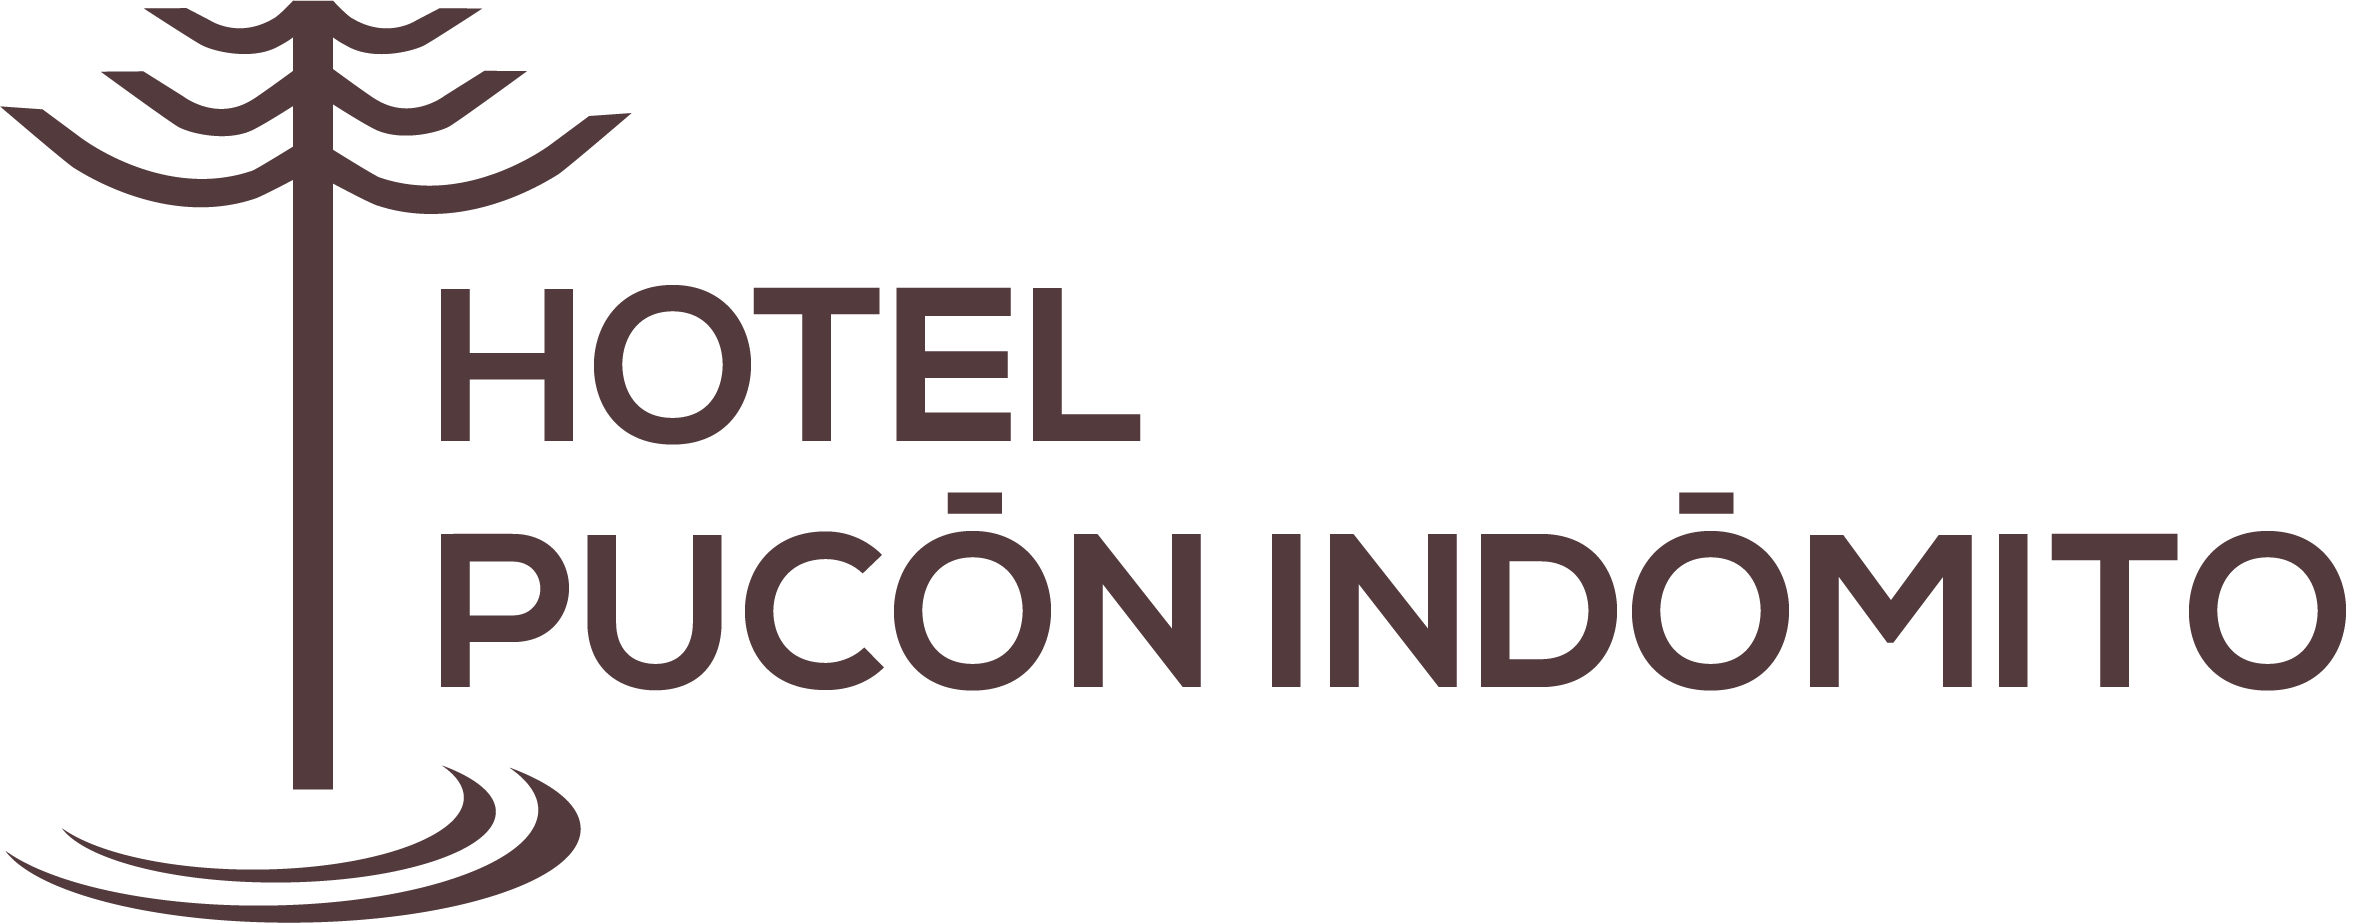 Hotel Pucón Indómito \ title=